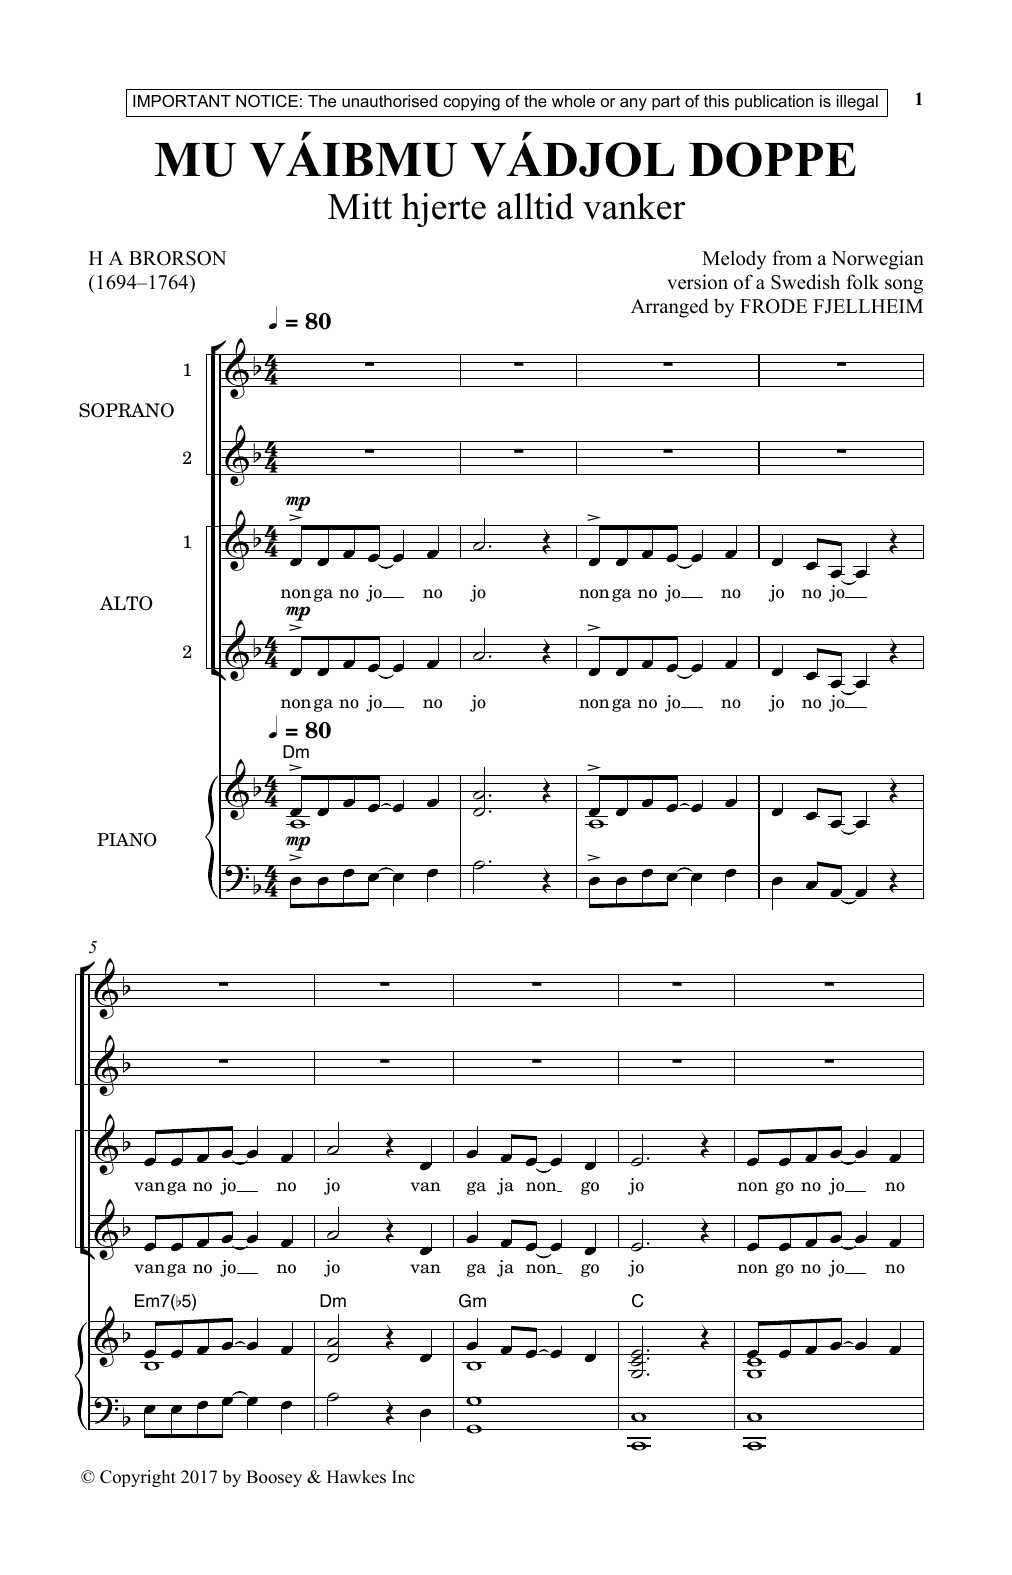 Download Frode Fjellheim Mu Vaibmu Vadjol Doppe Sheet Music and learn how to play SSA Choir PDF digital score in minutes